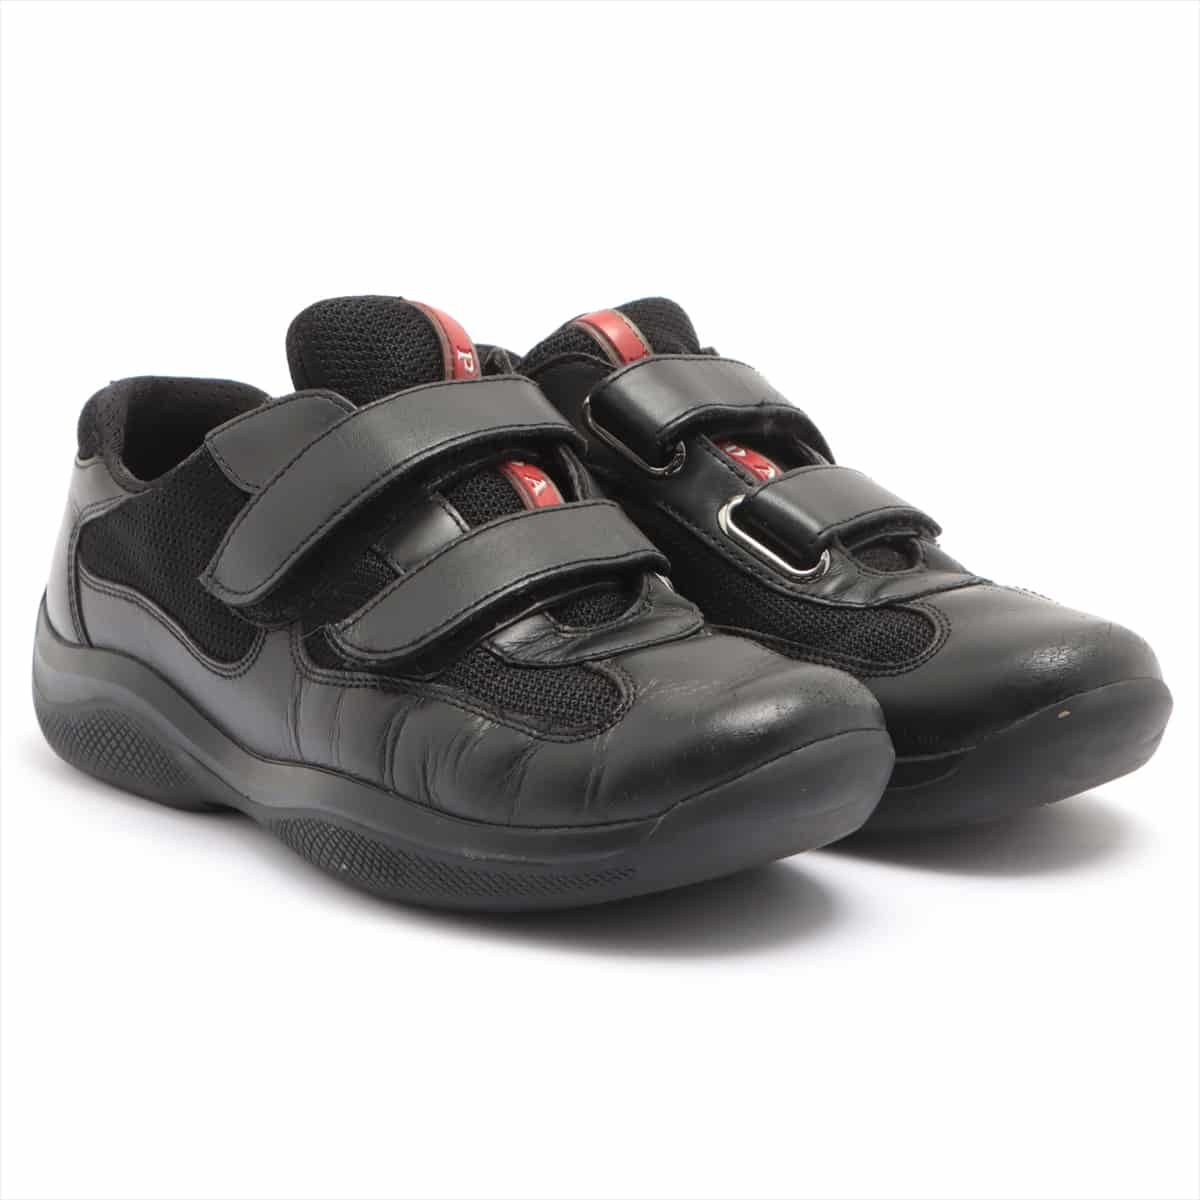 Prada Sport Leather Sneakers 36 1/2 Ladies' Black Velcro